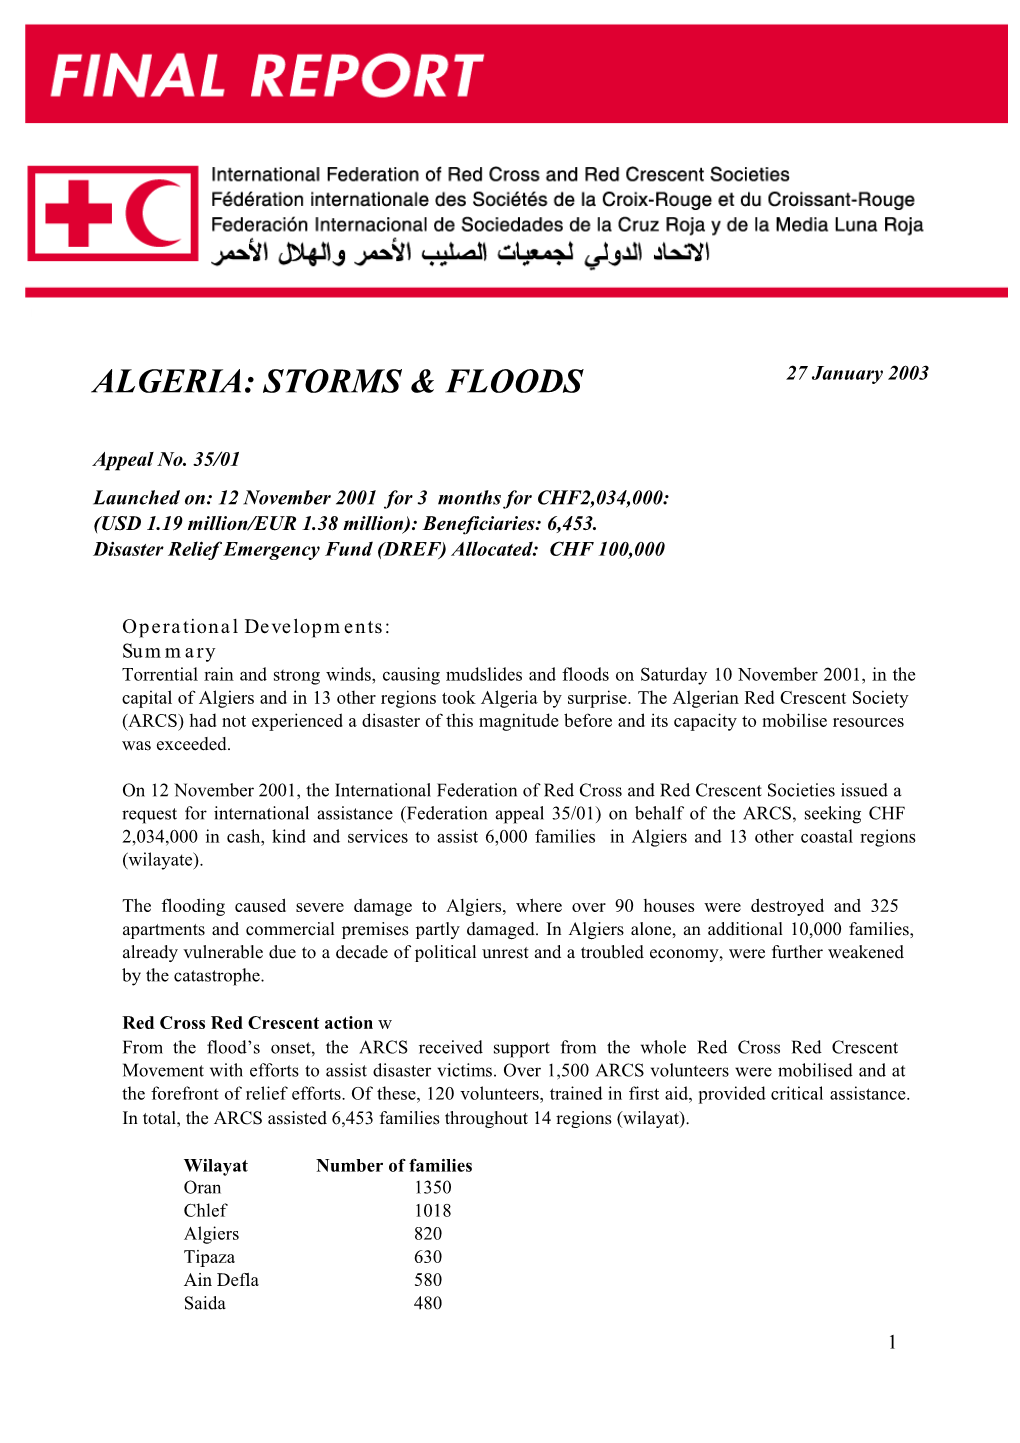 Algeria Storms and Floods Final Report